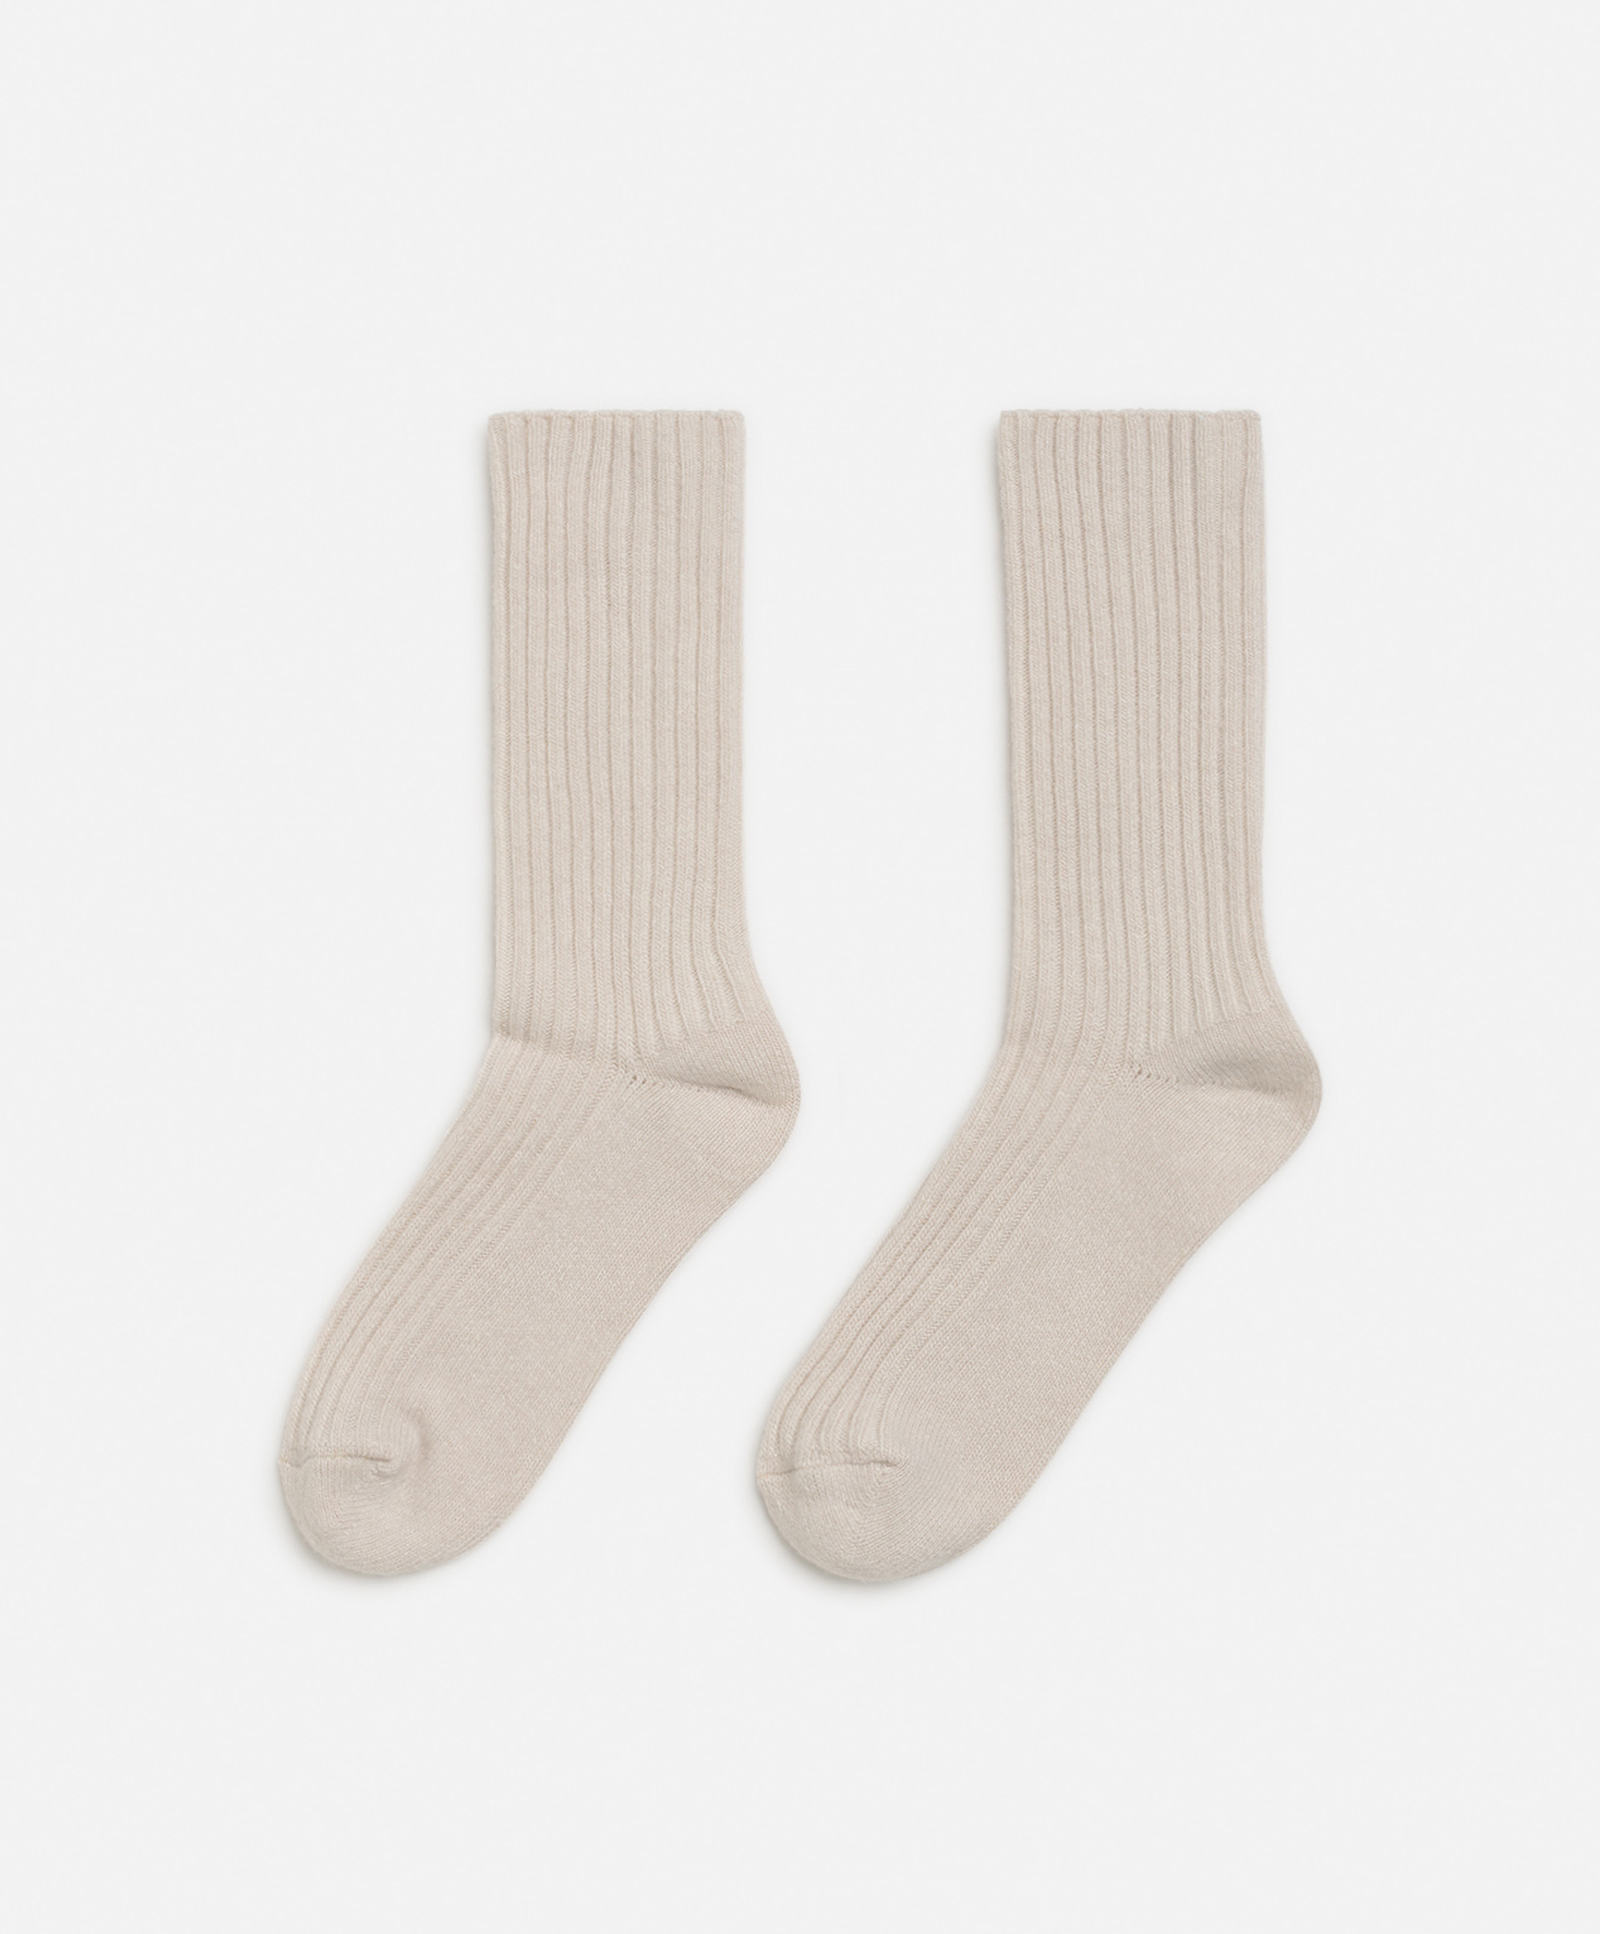 Medium ribbed wool and cashmere socks